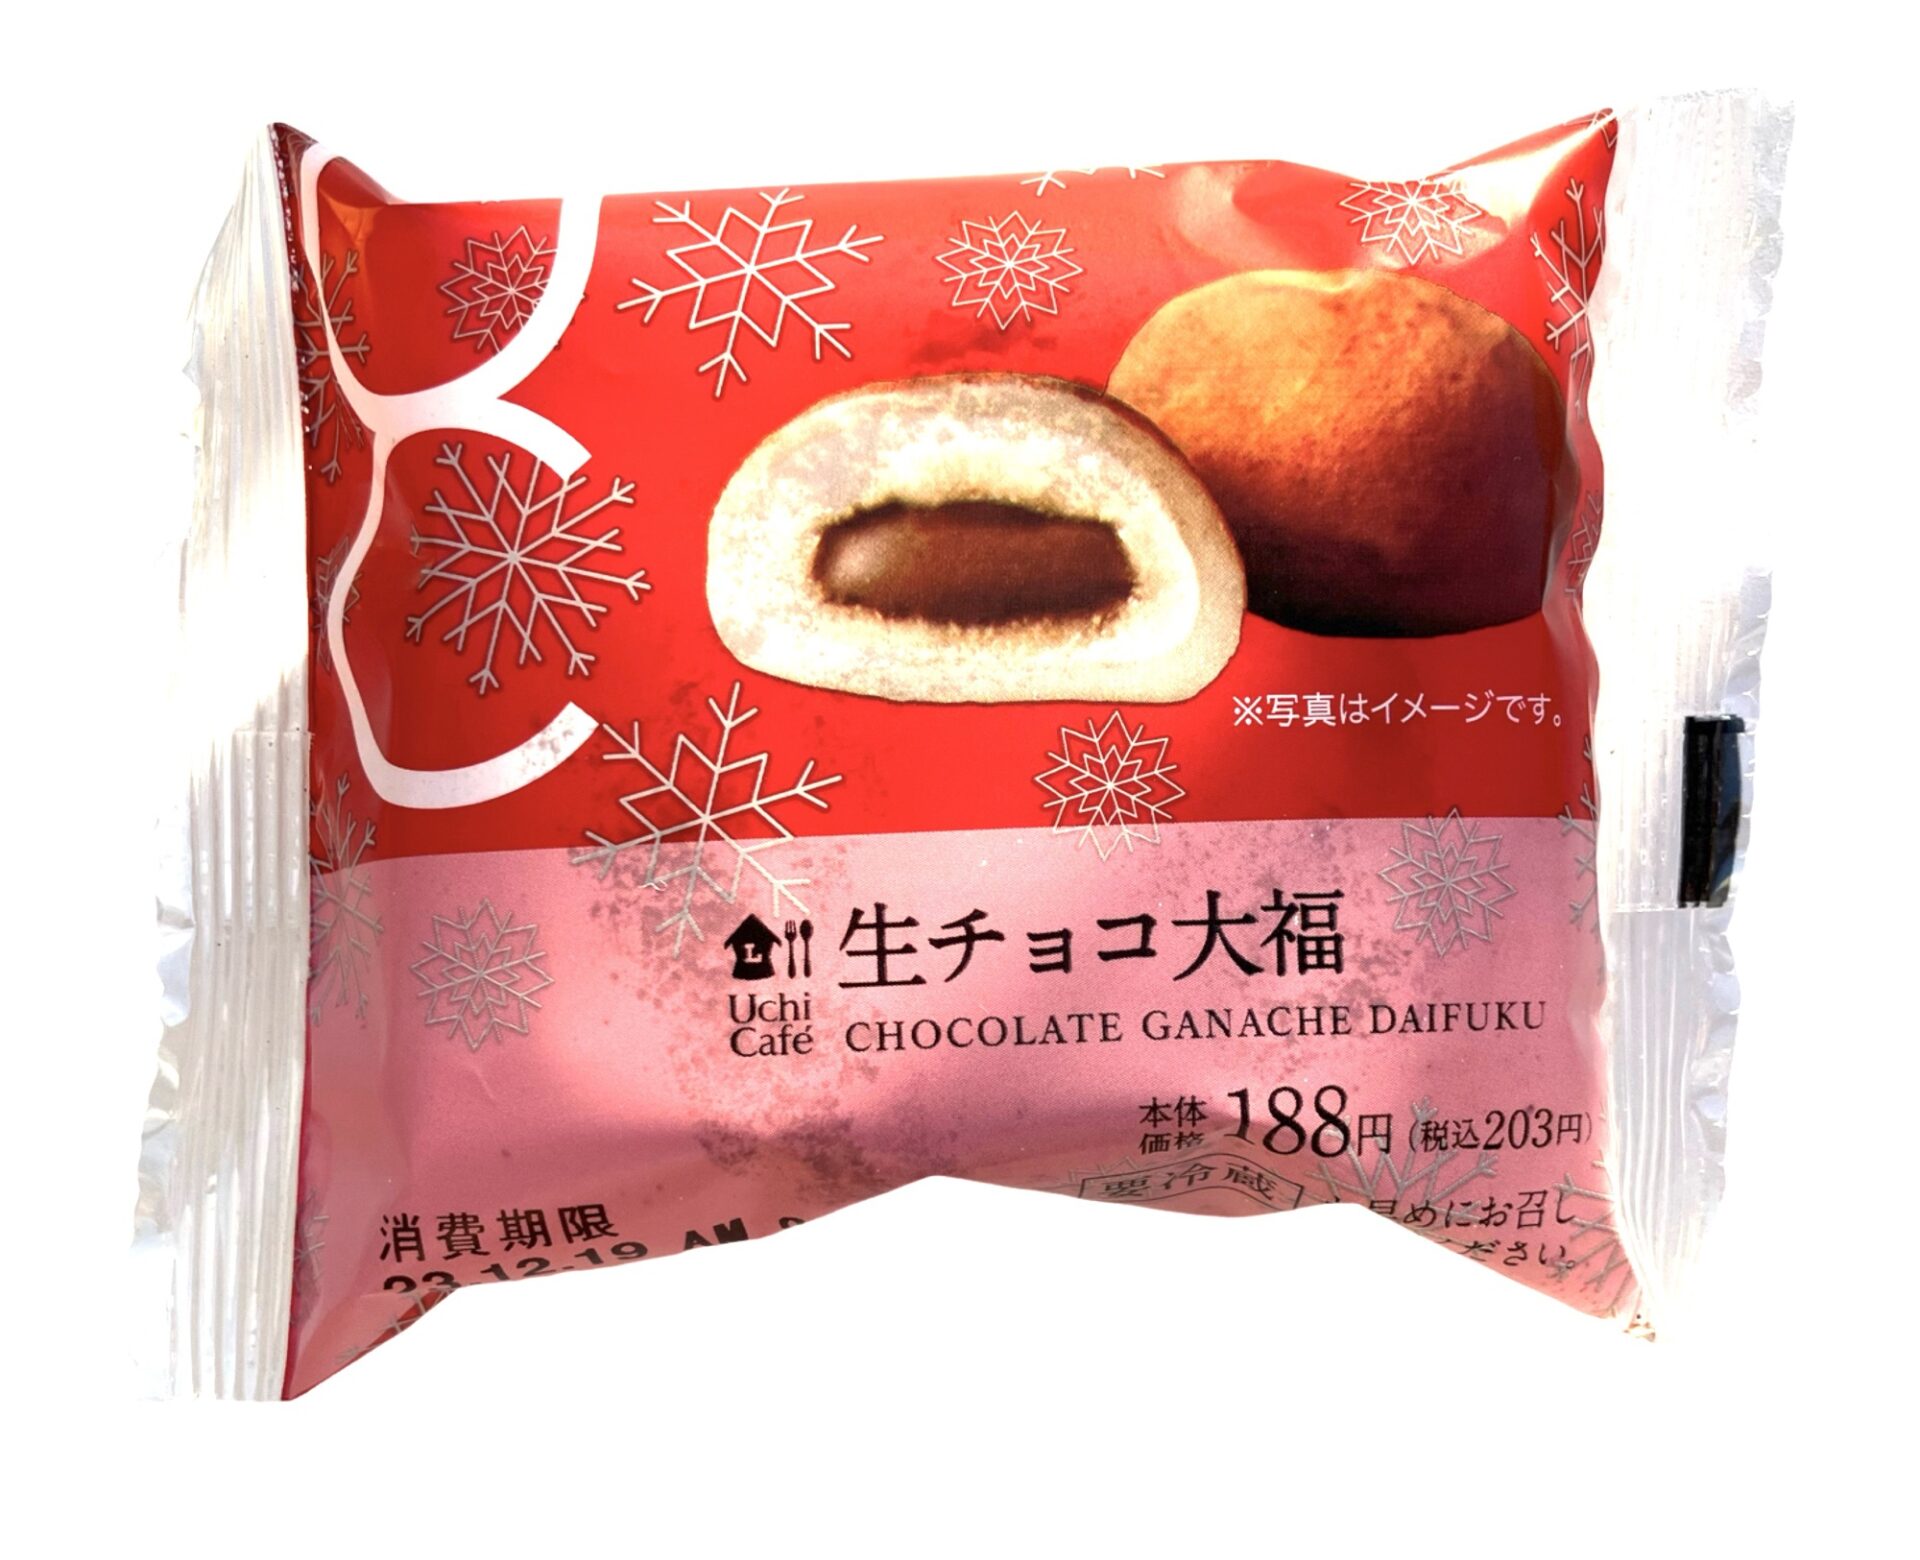 lawson-sweets-chocolate-ganache-daifuku-package